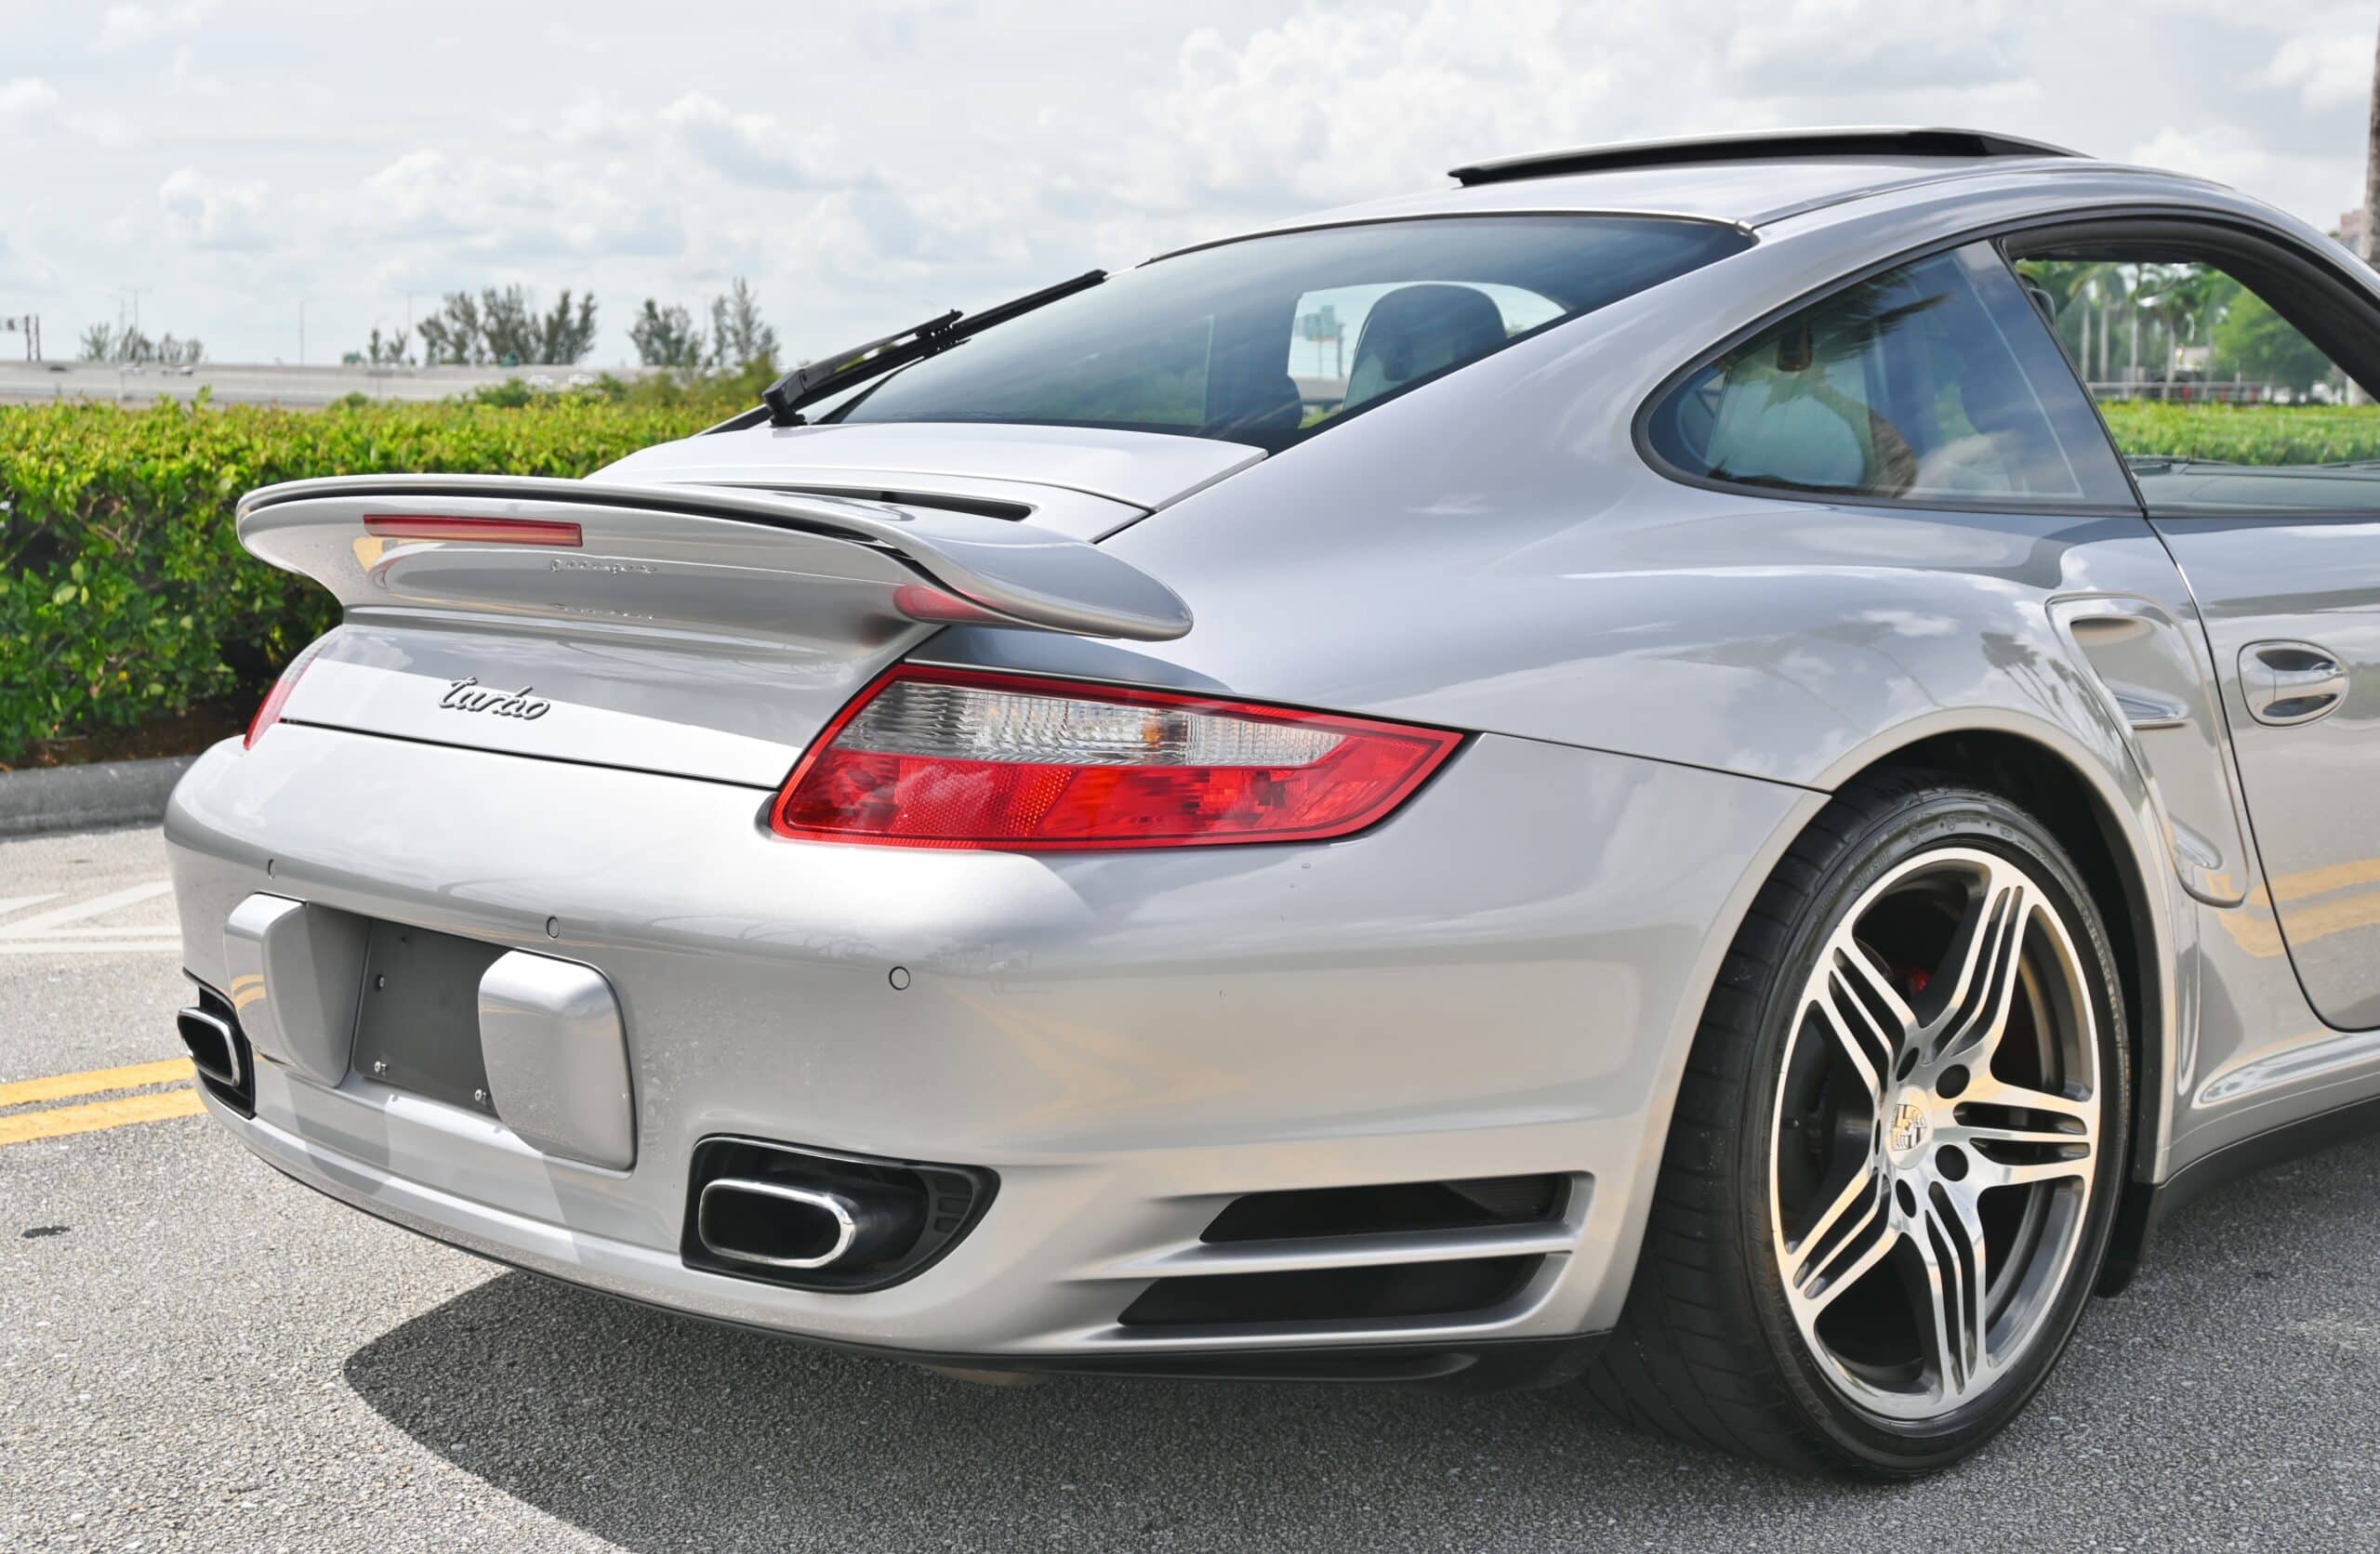 2007 Porsche 911 Turbo 997.1 6 Speed Manual-Sport Seats-Original Window Sticker-Full Service History-Stock